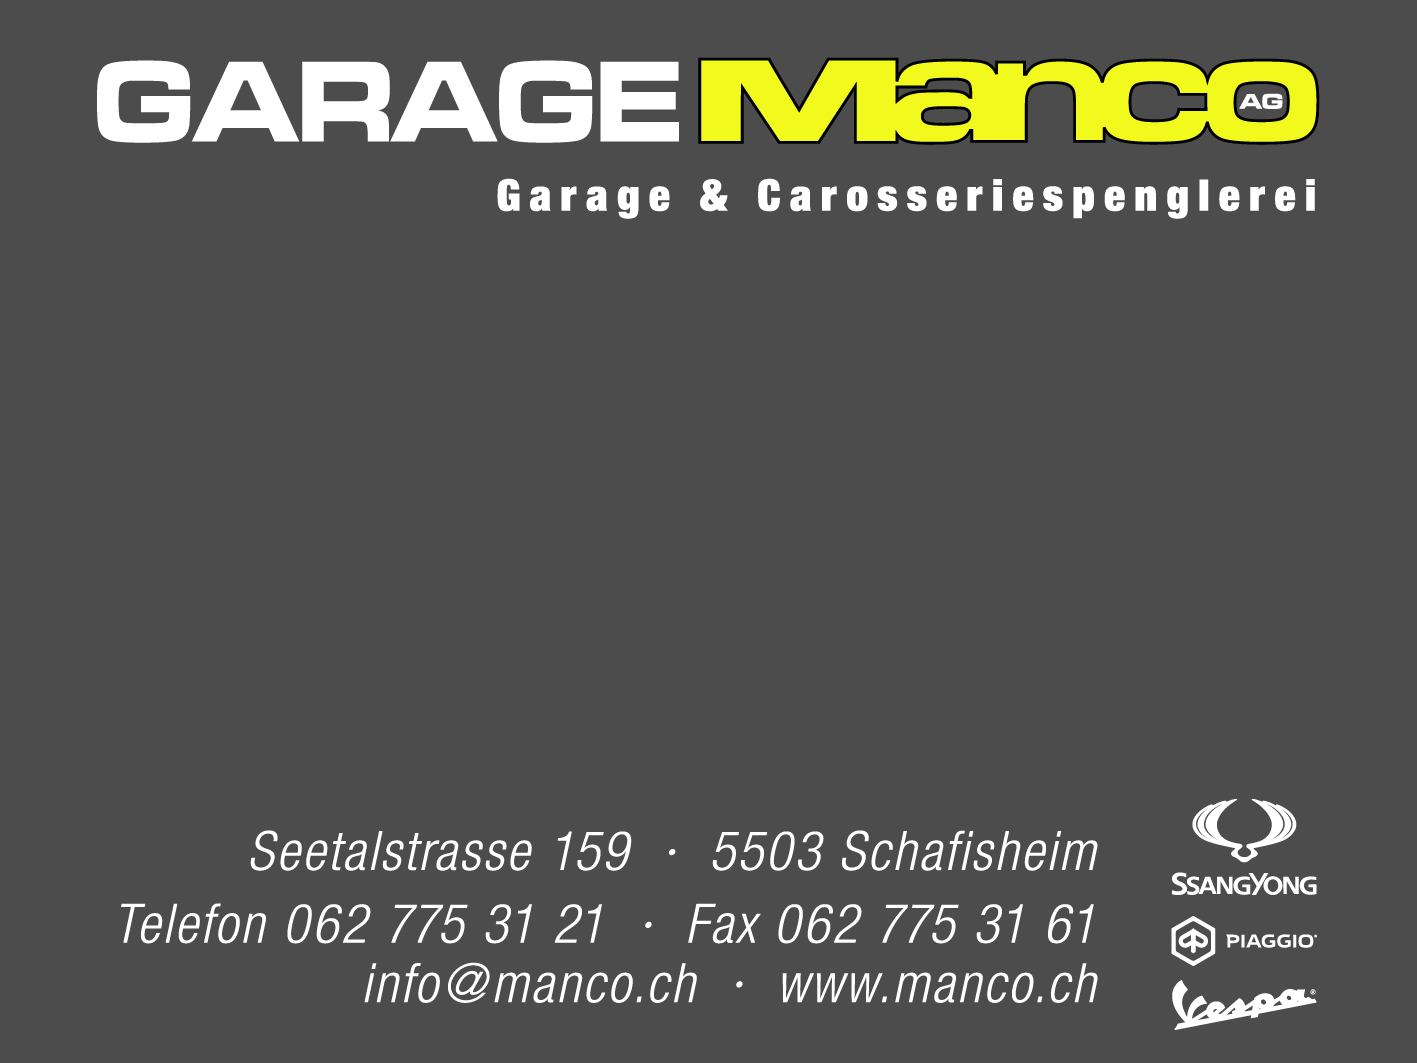 Garage Manco AG